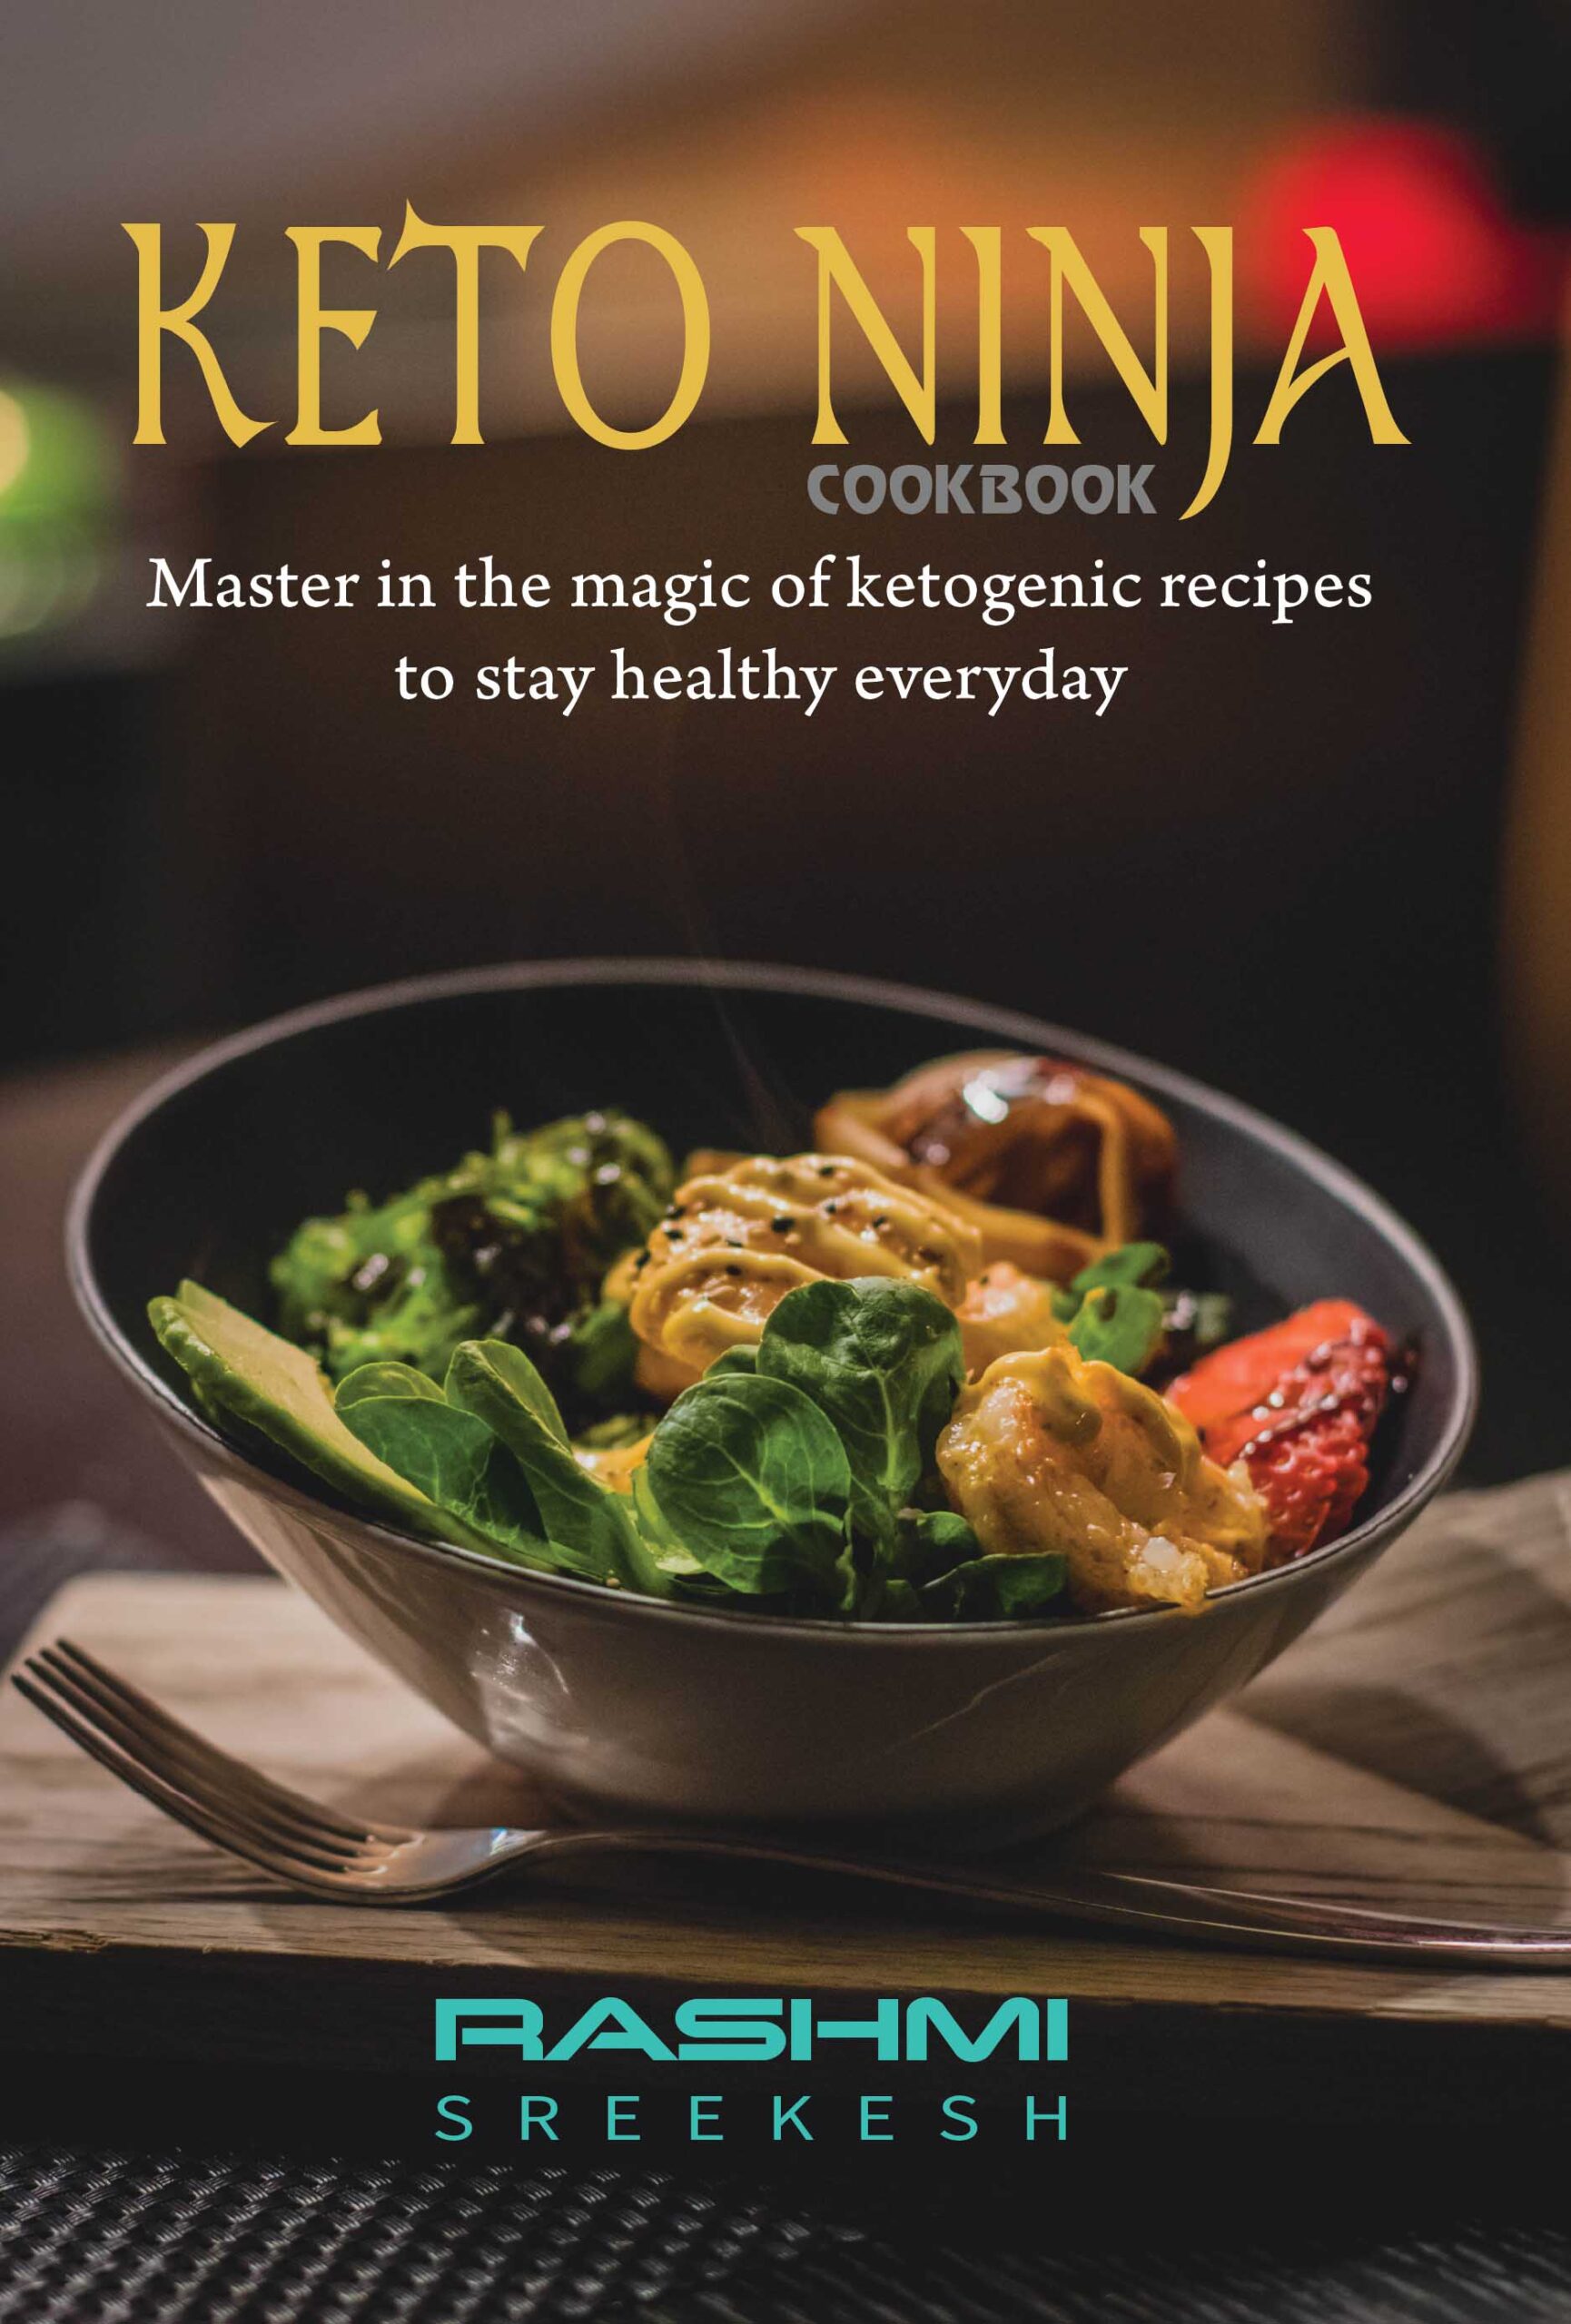 FREE: Keto Ninja cookbook: Master in the magic of ketogenic recipes to stay healthy everyday by Rashmi Sreekesh